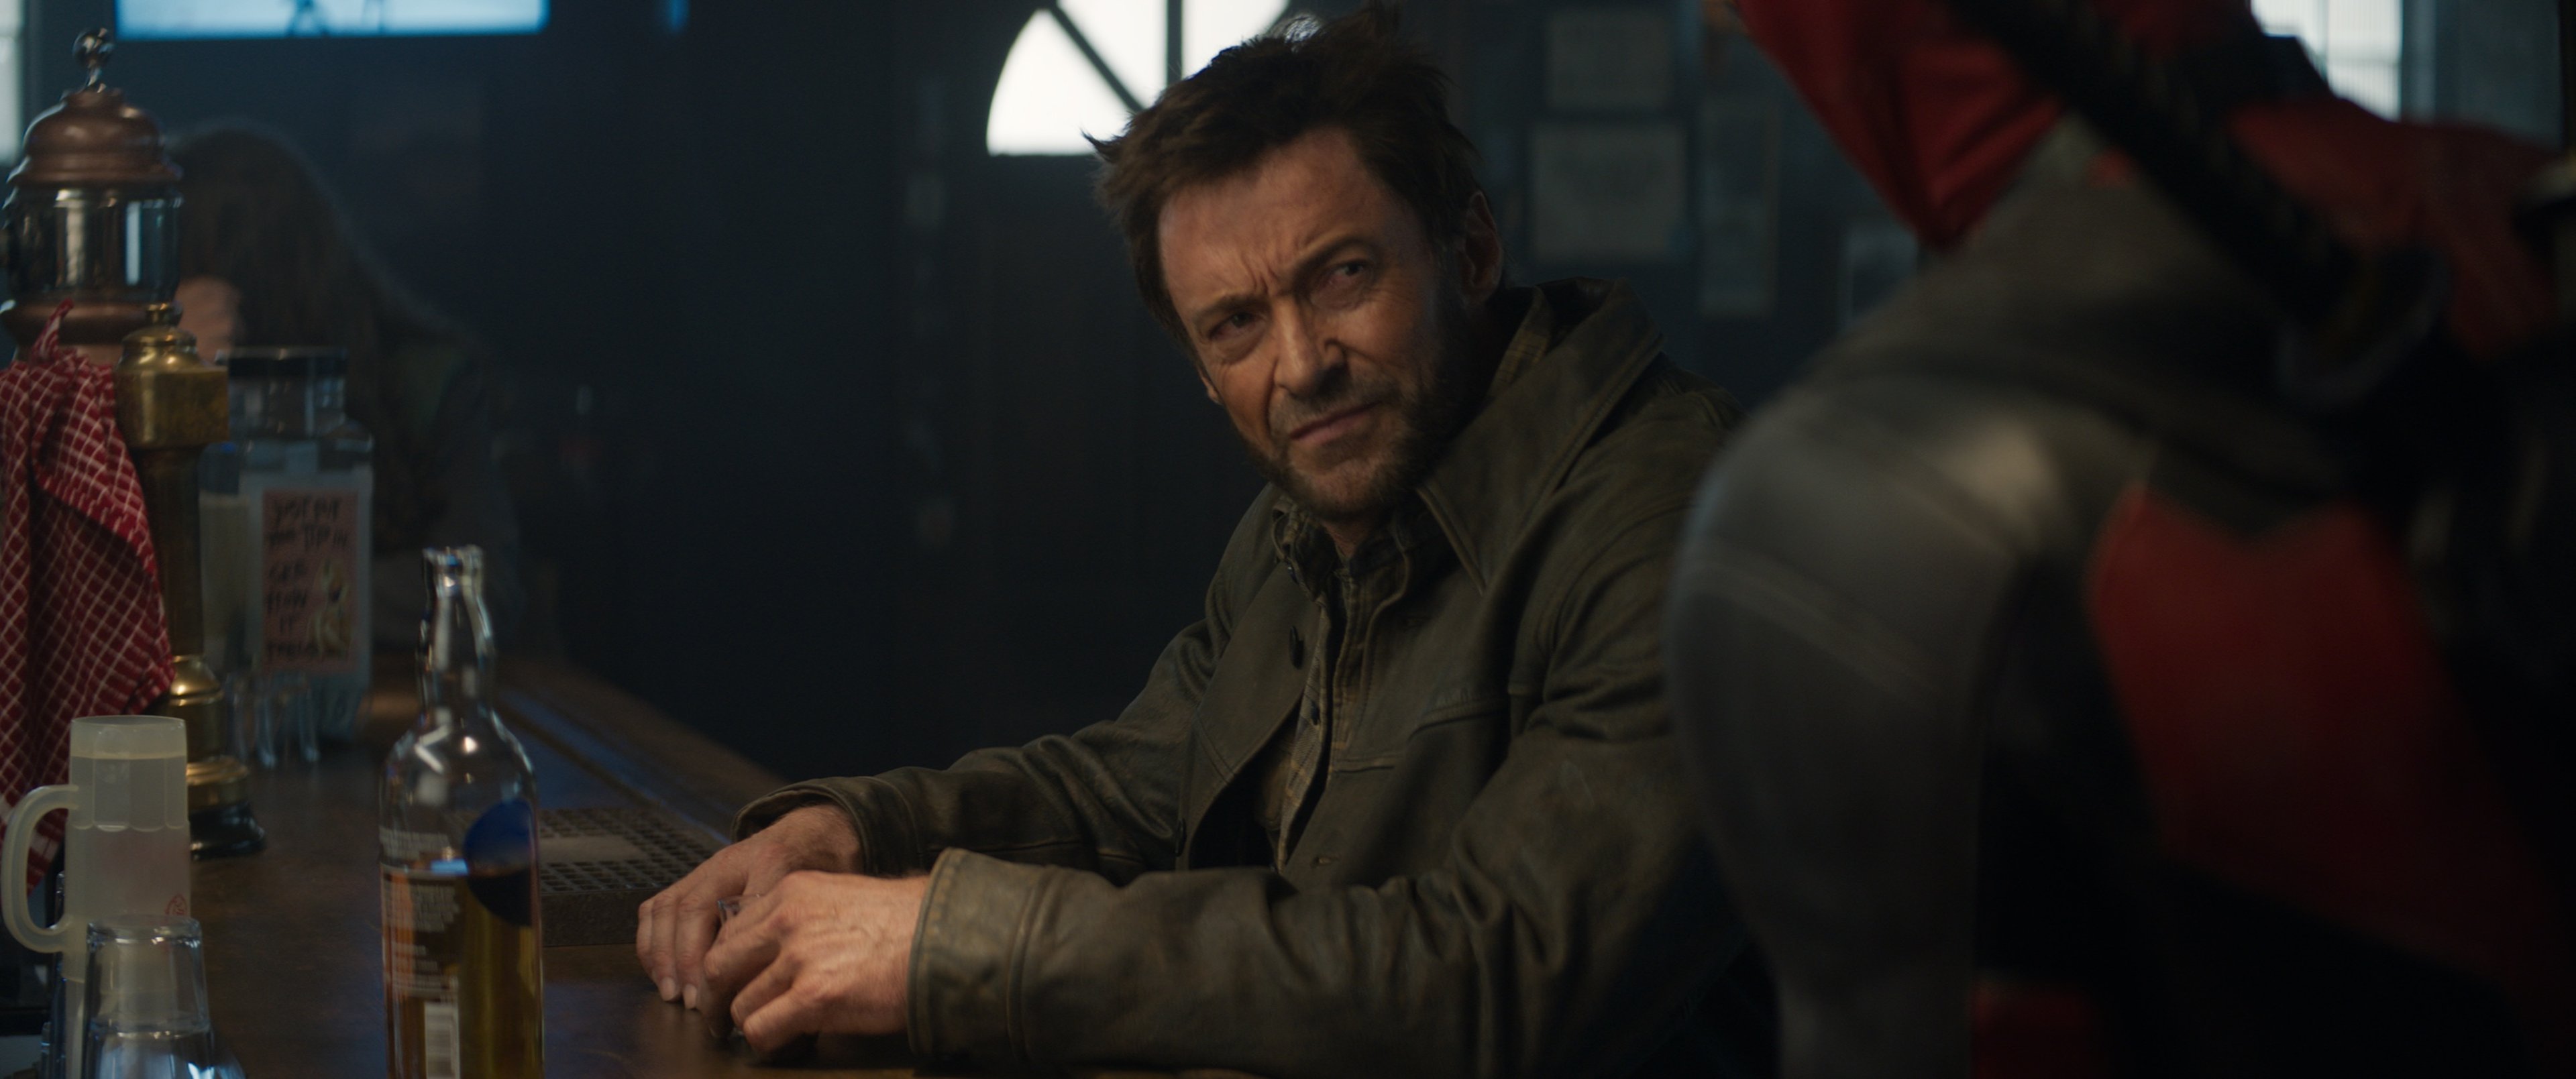 Hugh Jackman como Wolverine/Logan e Ryan Reynolds como Deadpool em "Deadpool & Wolverine"